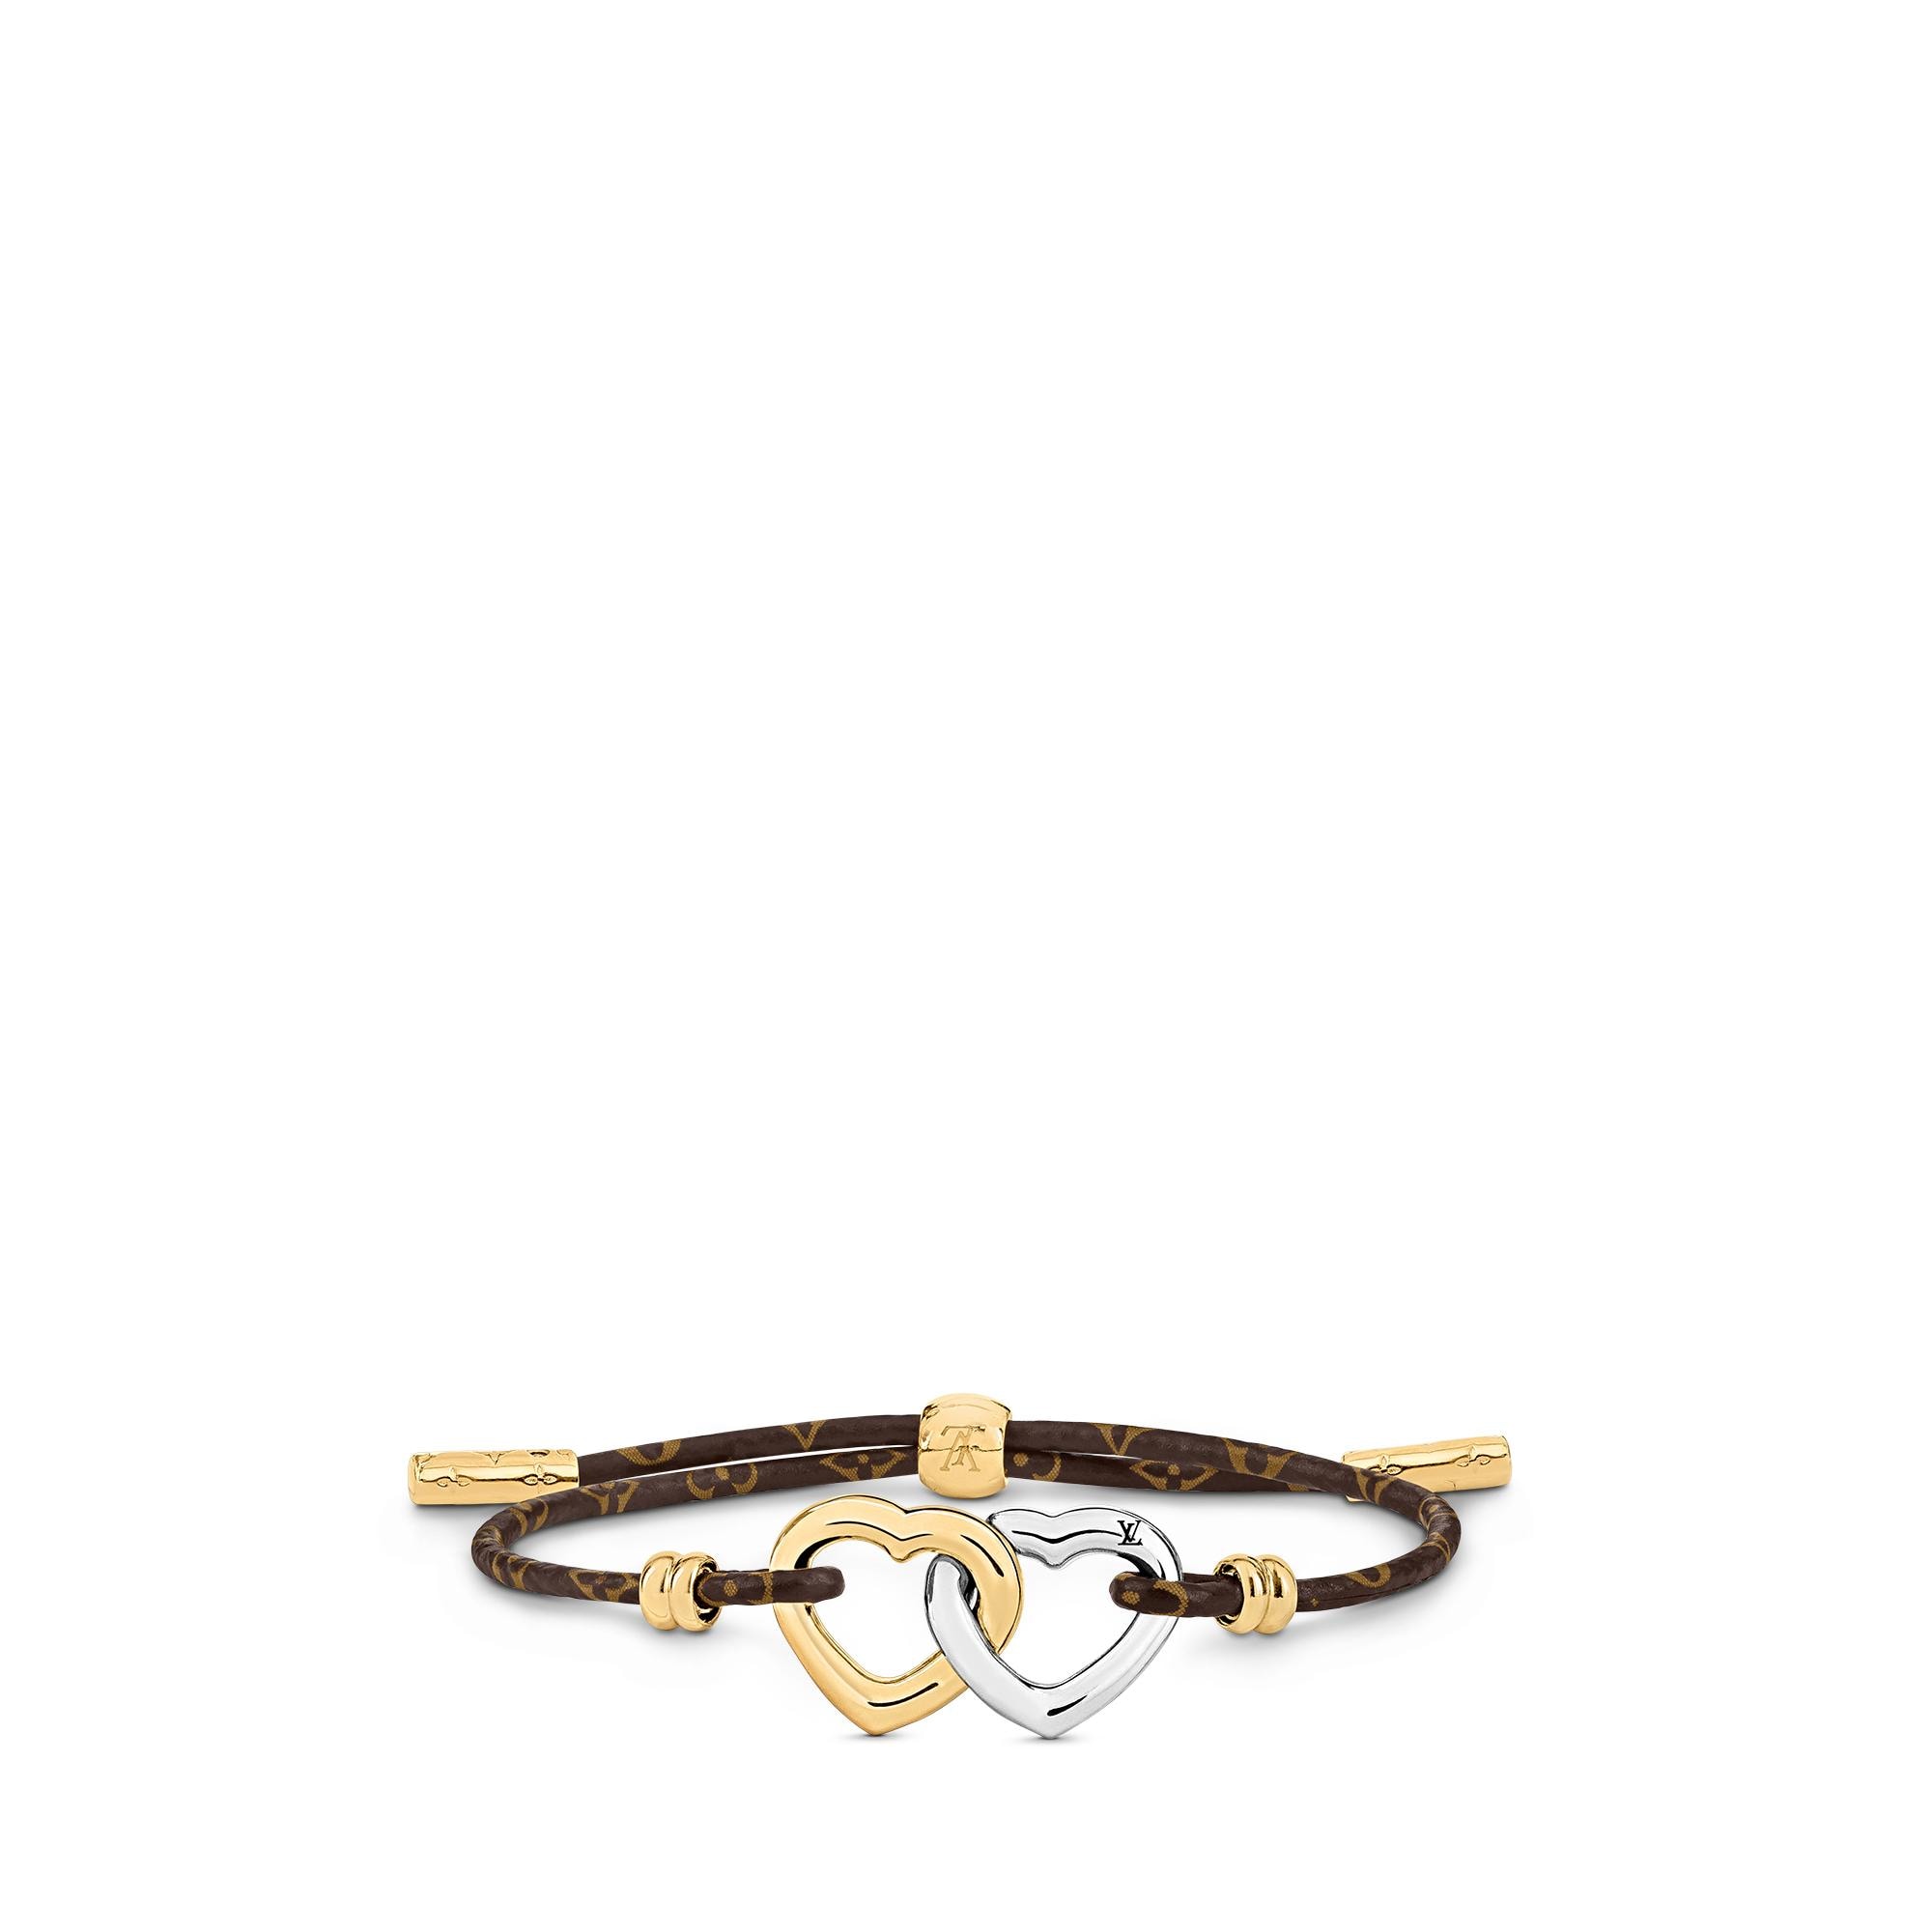 Shop Louis Vuitton Say Yes Bracelet (SAY YES BRACELET, M6758F) by Mikrie